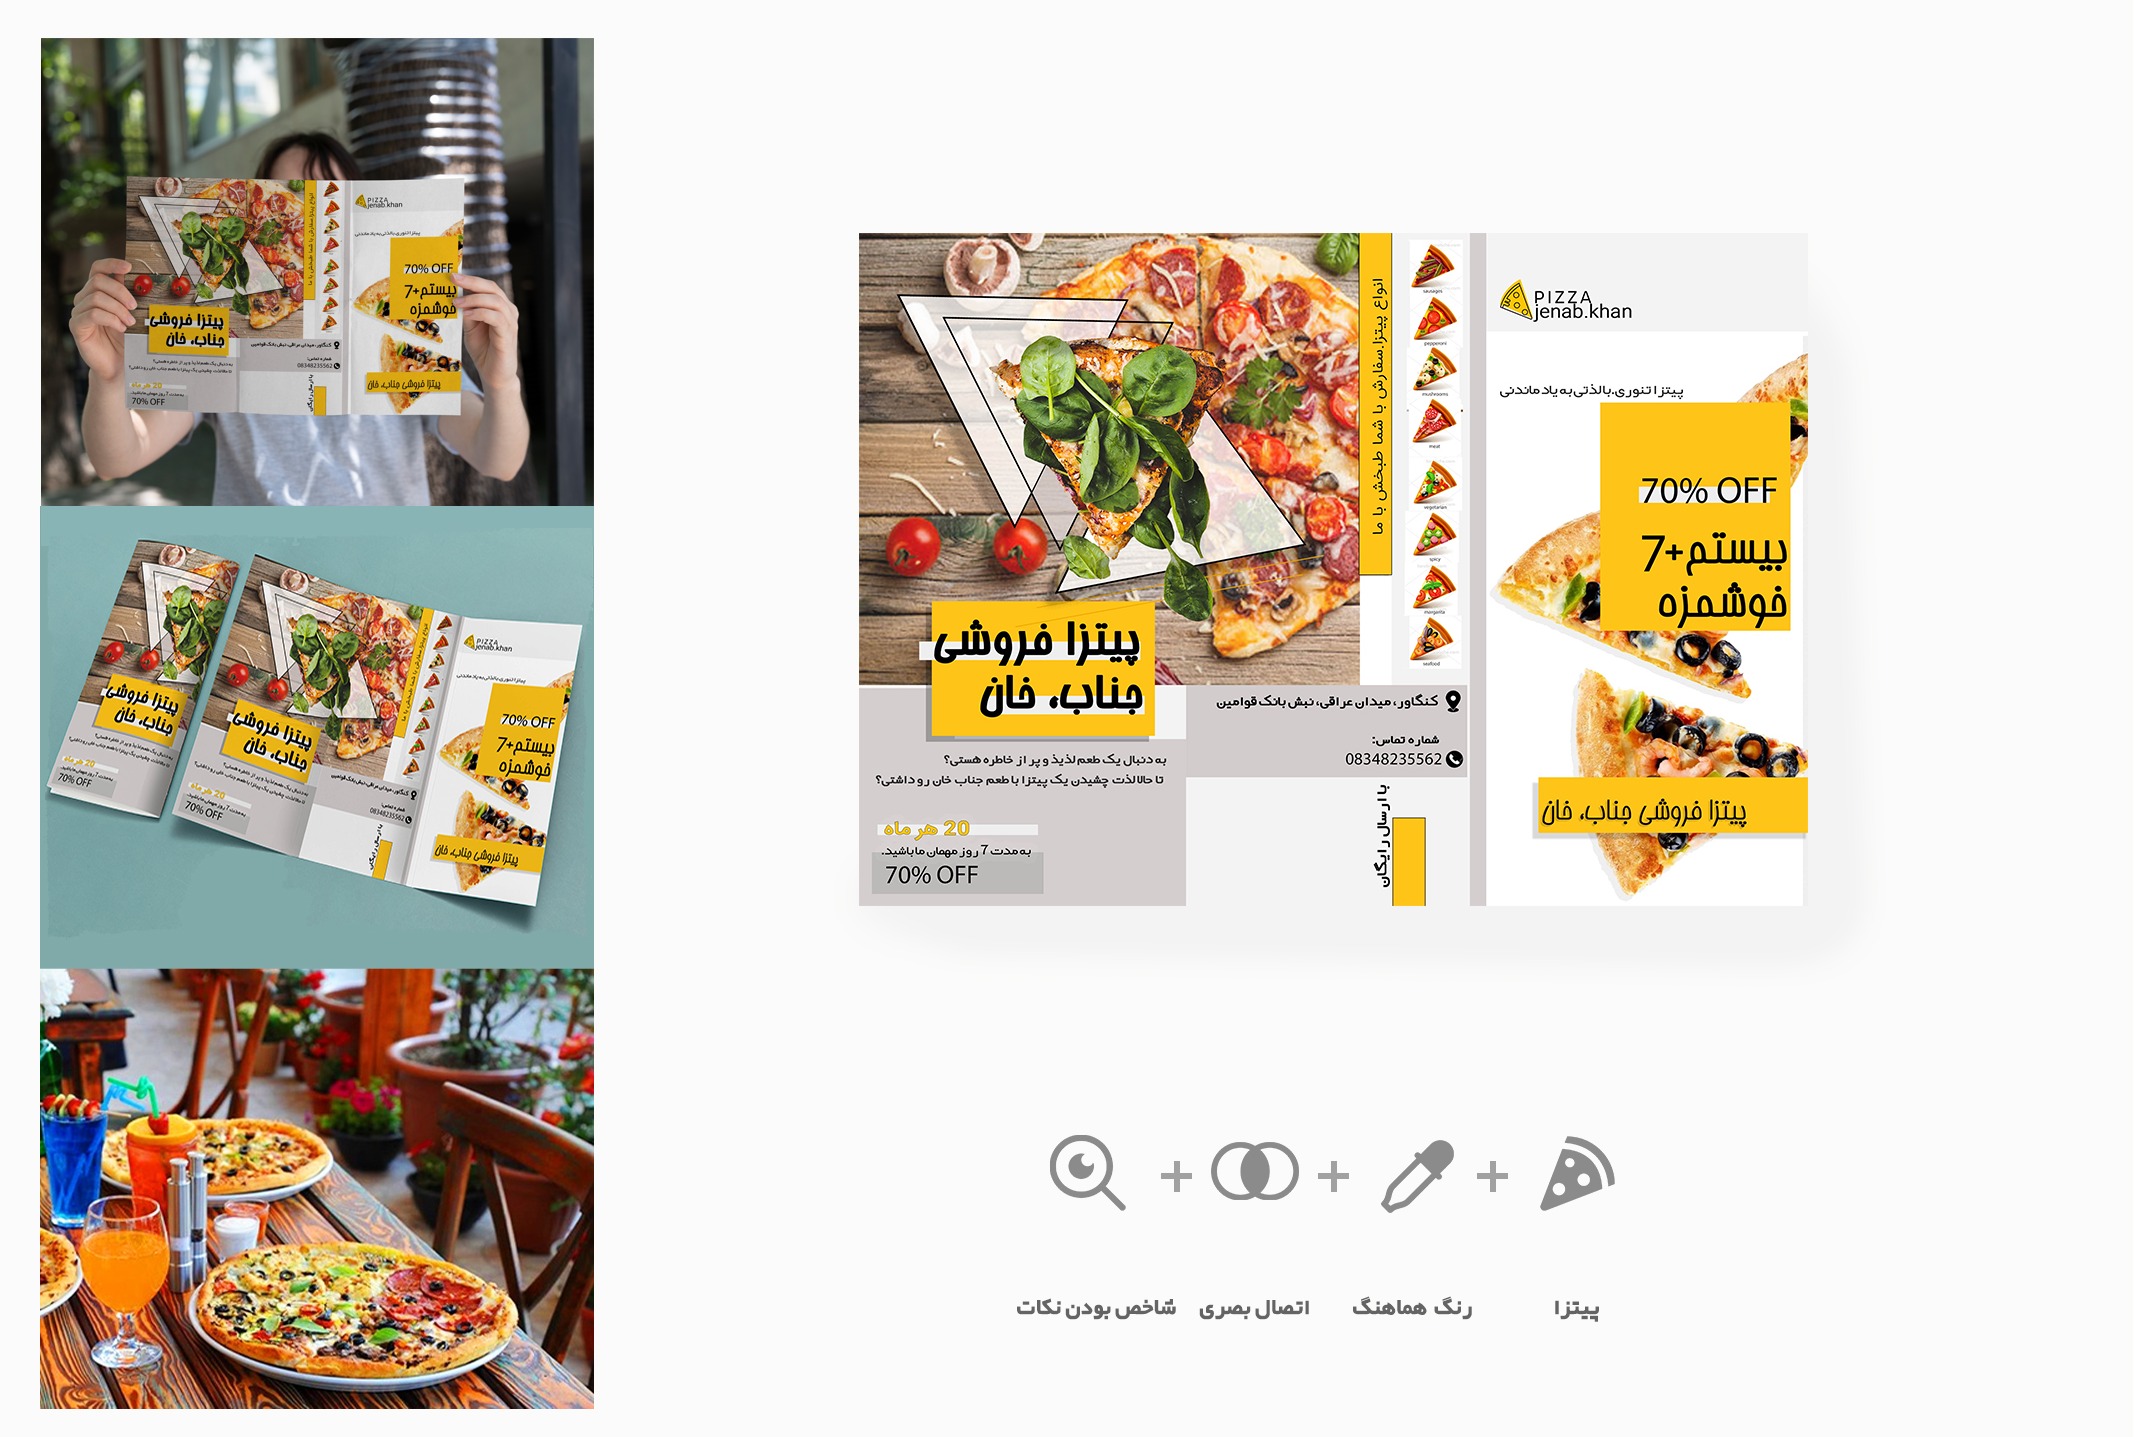 بروشور پیتزا فروشی جناب خان / Mr. Khan Pizza Shop Brochure